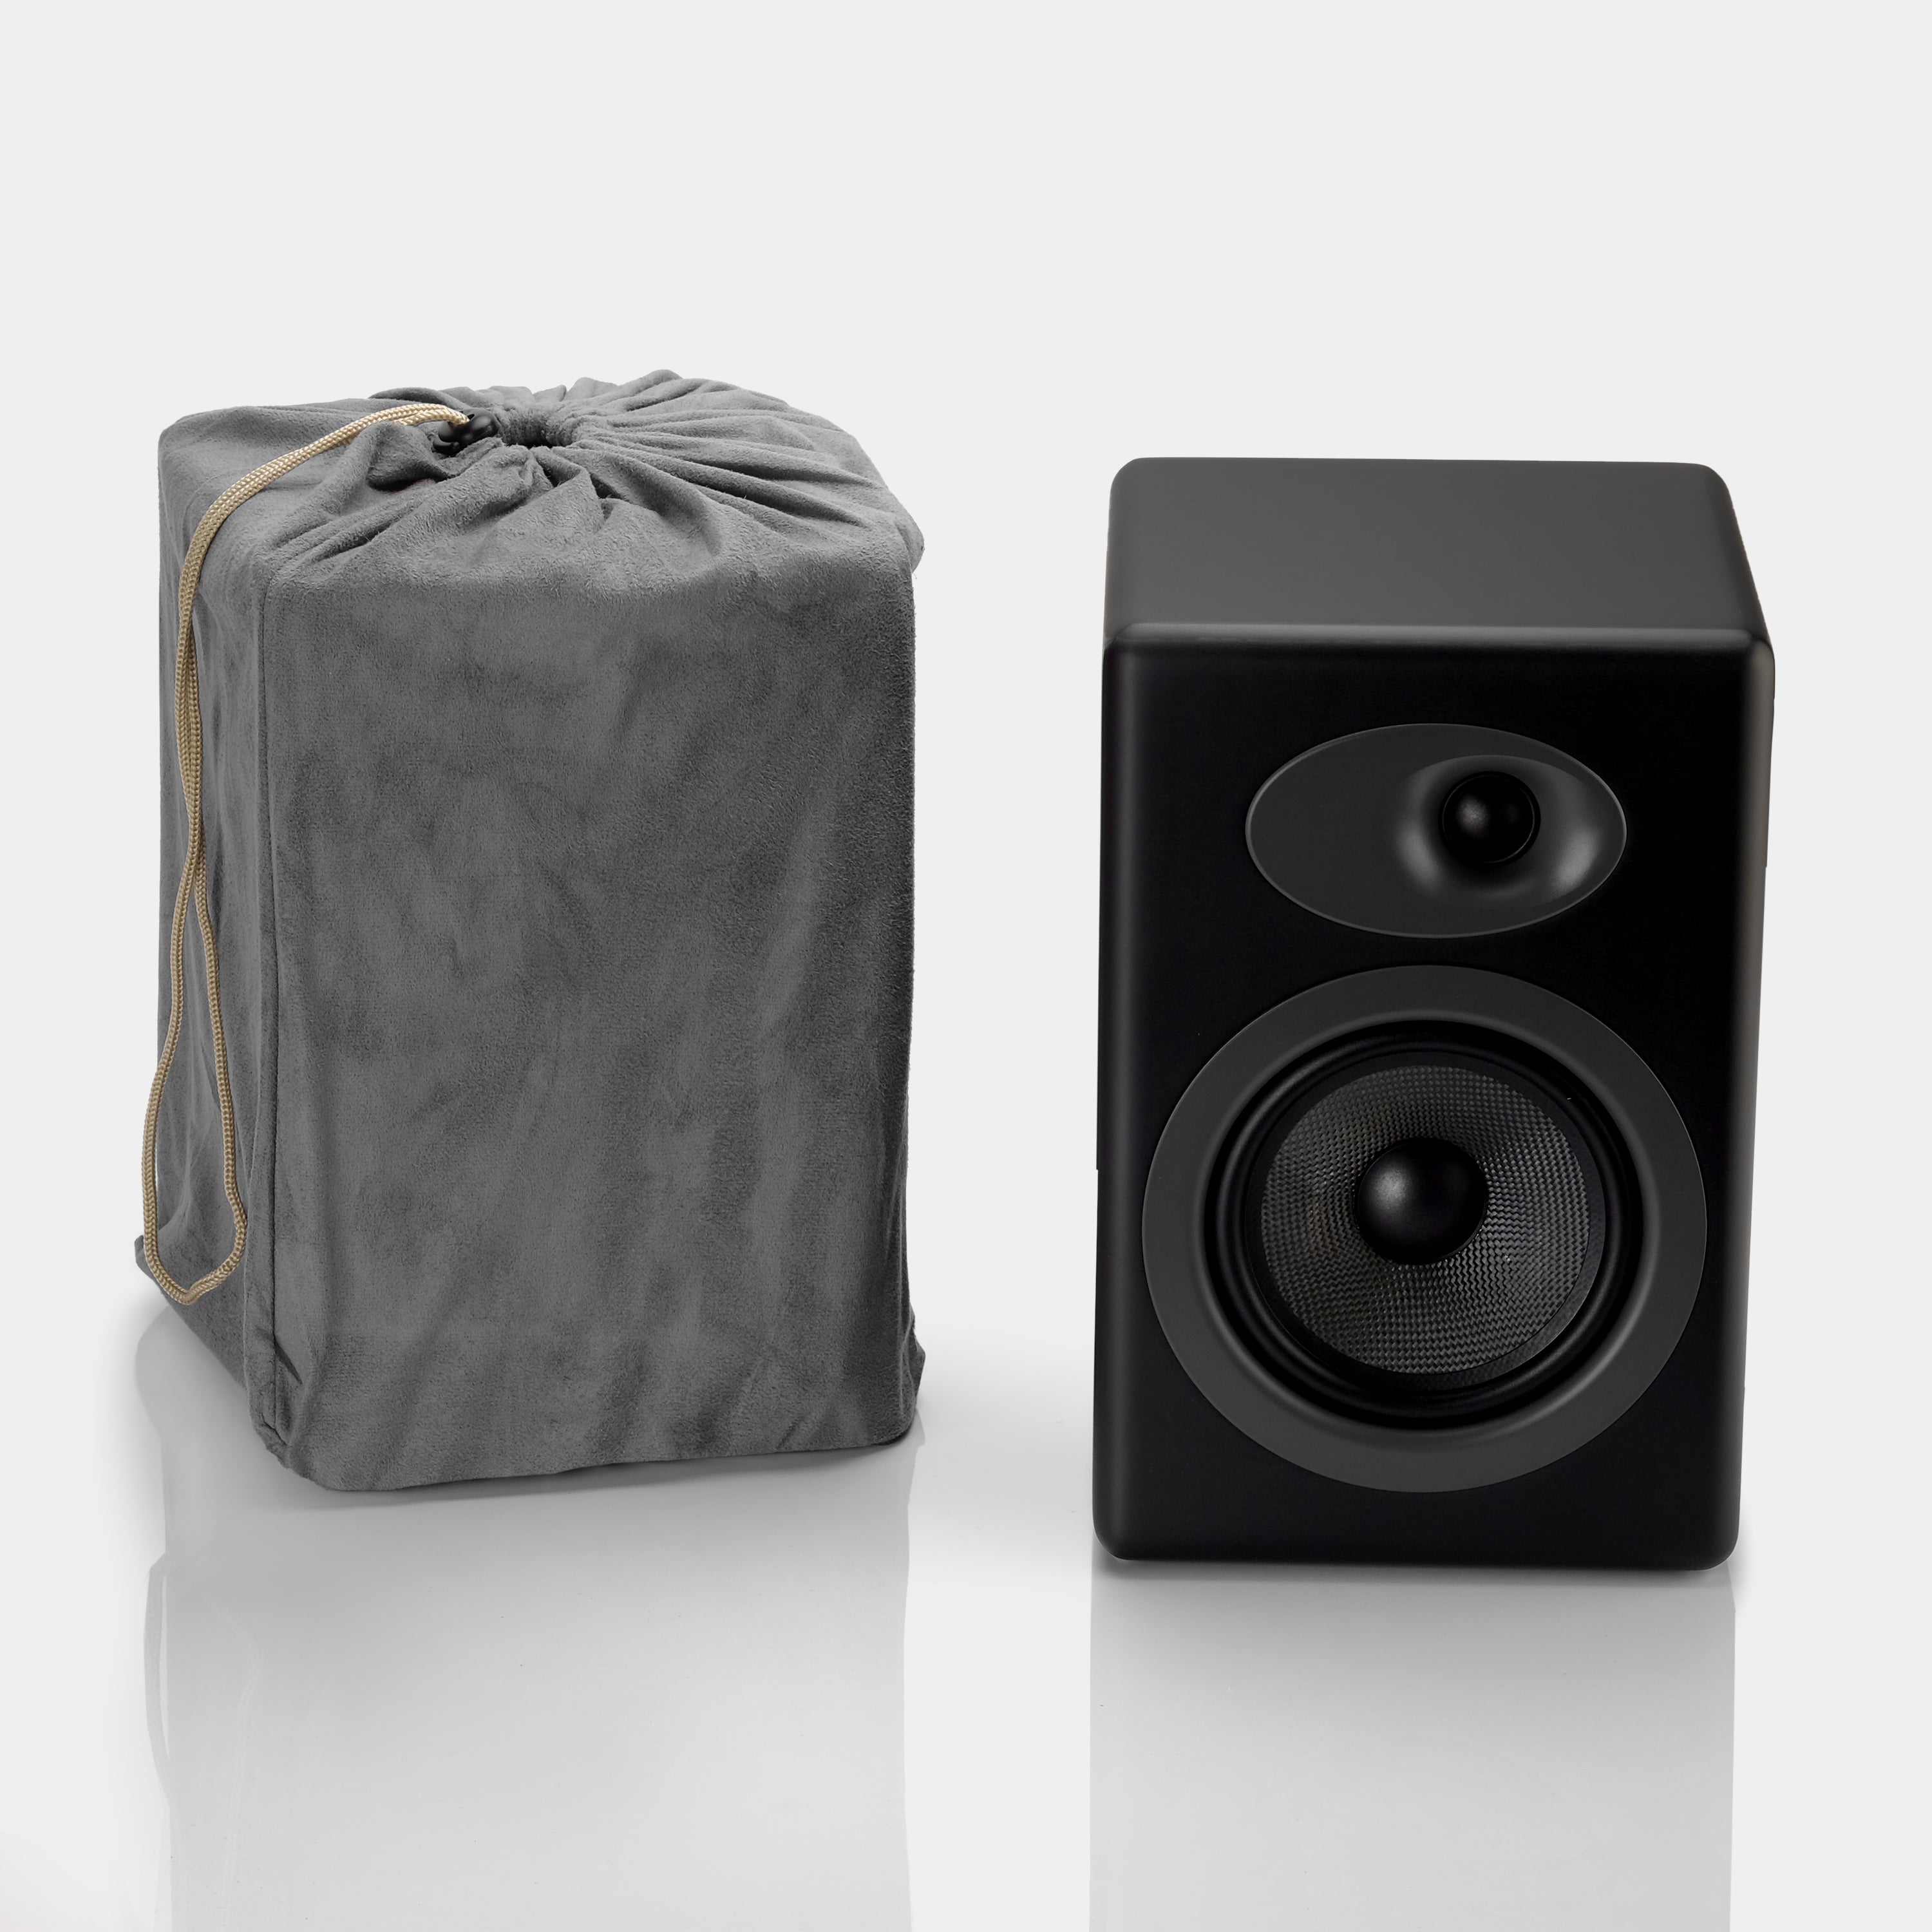 Audioengine A5+ Black Powered Speaker System